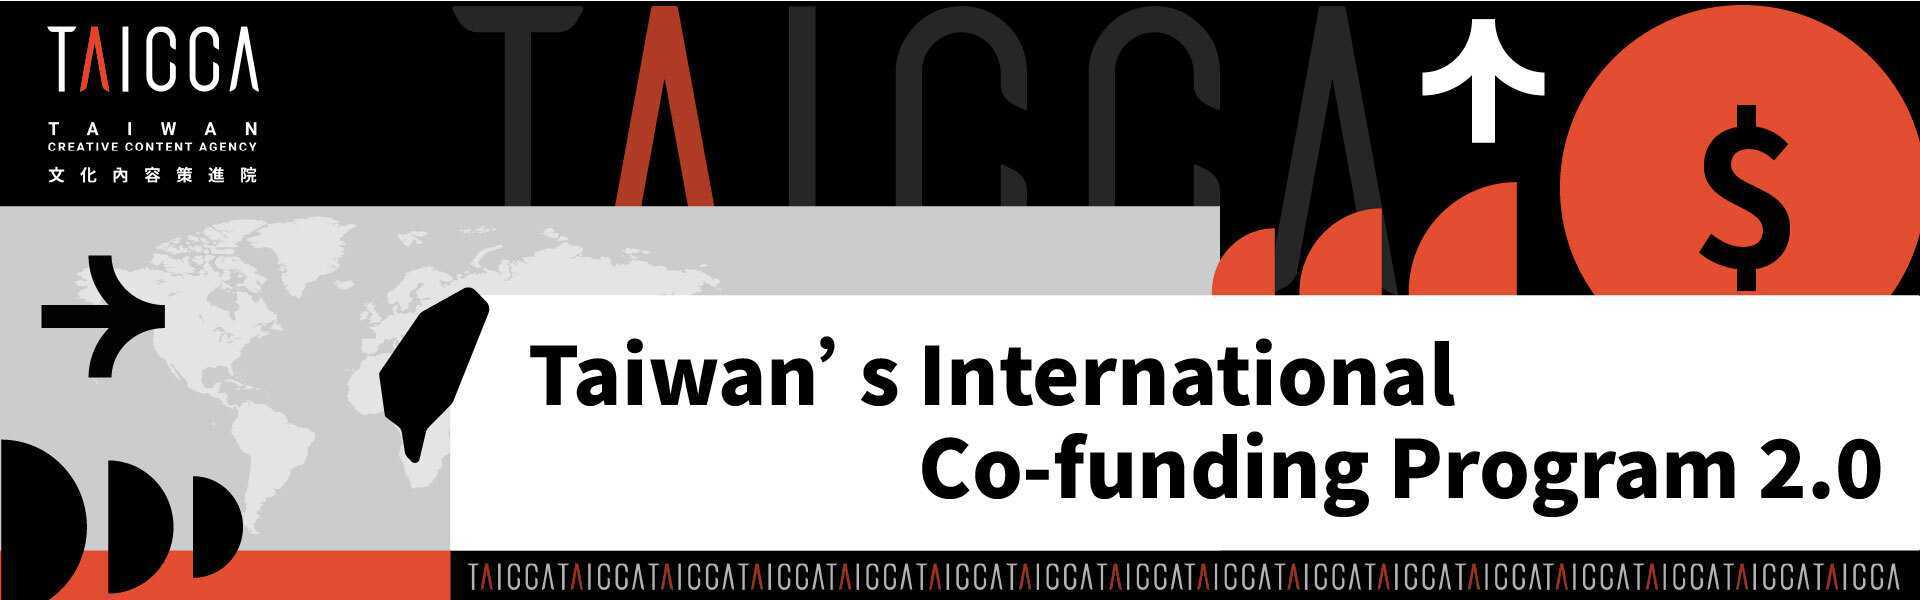 Taiwan’s International Co-funding Program 2.0 (TICP2.0)